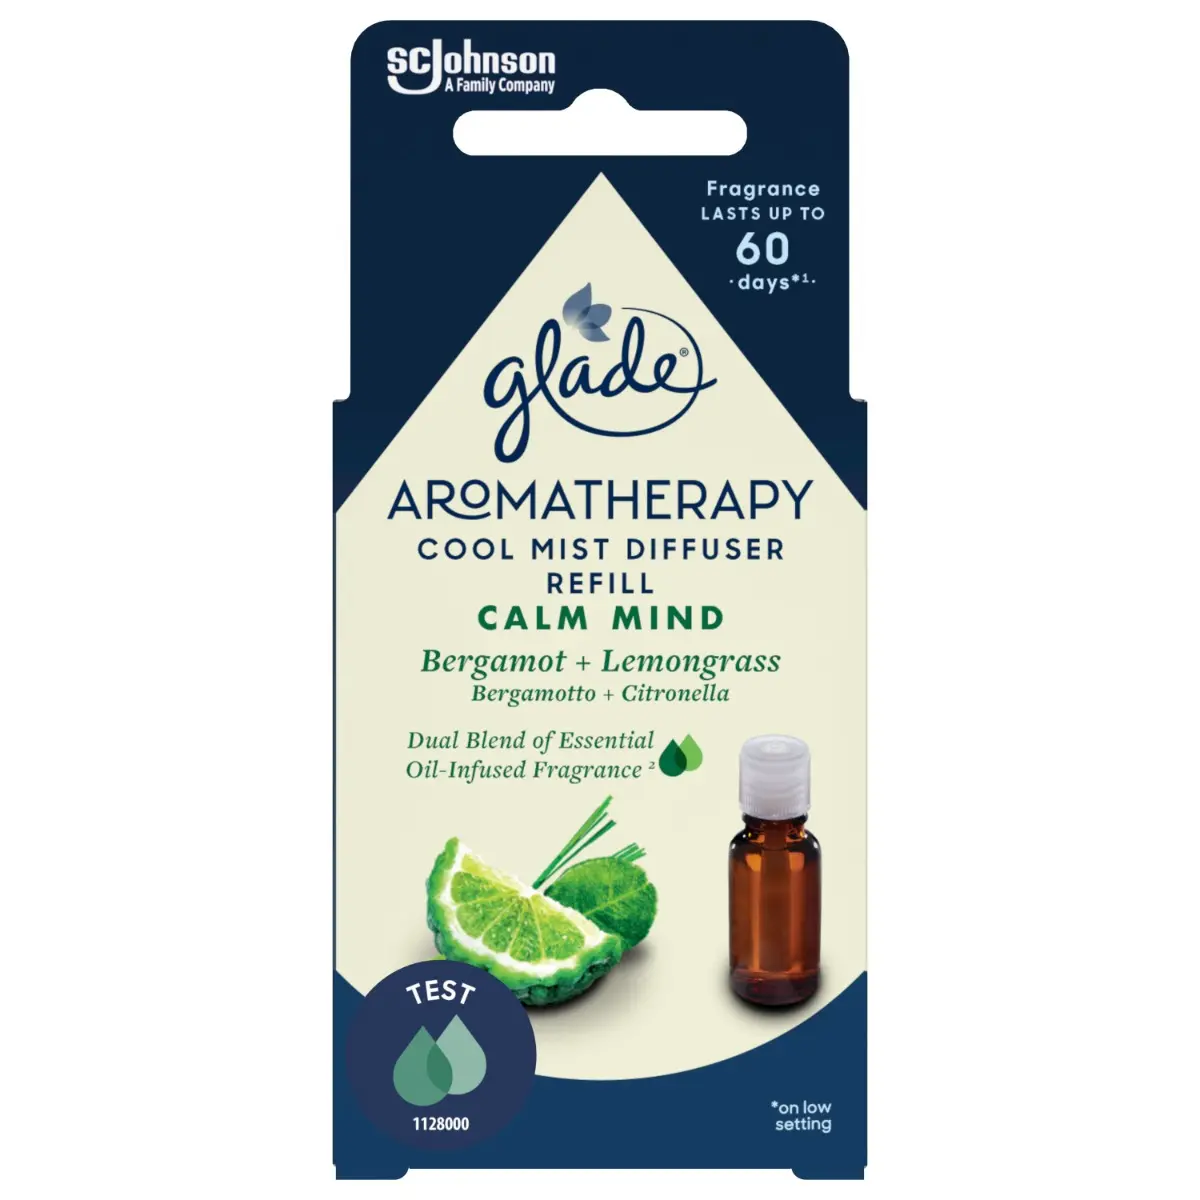 Glade Aromatherapy Cool Mist Diffuser - Calm mind - odorizant electric - rezerva